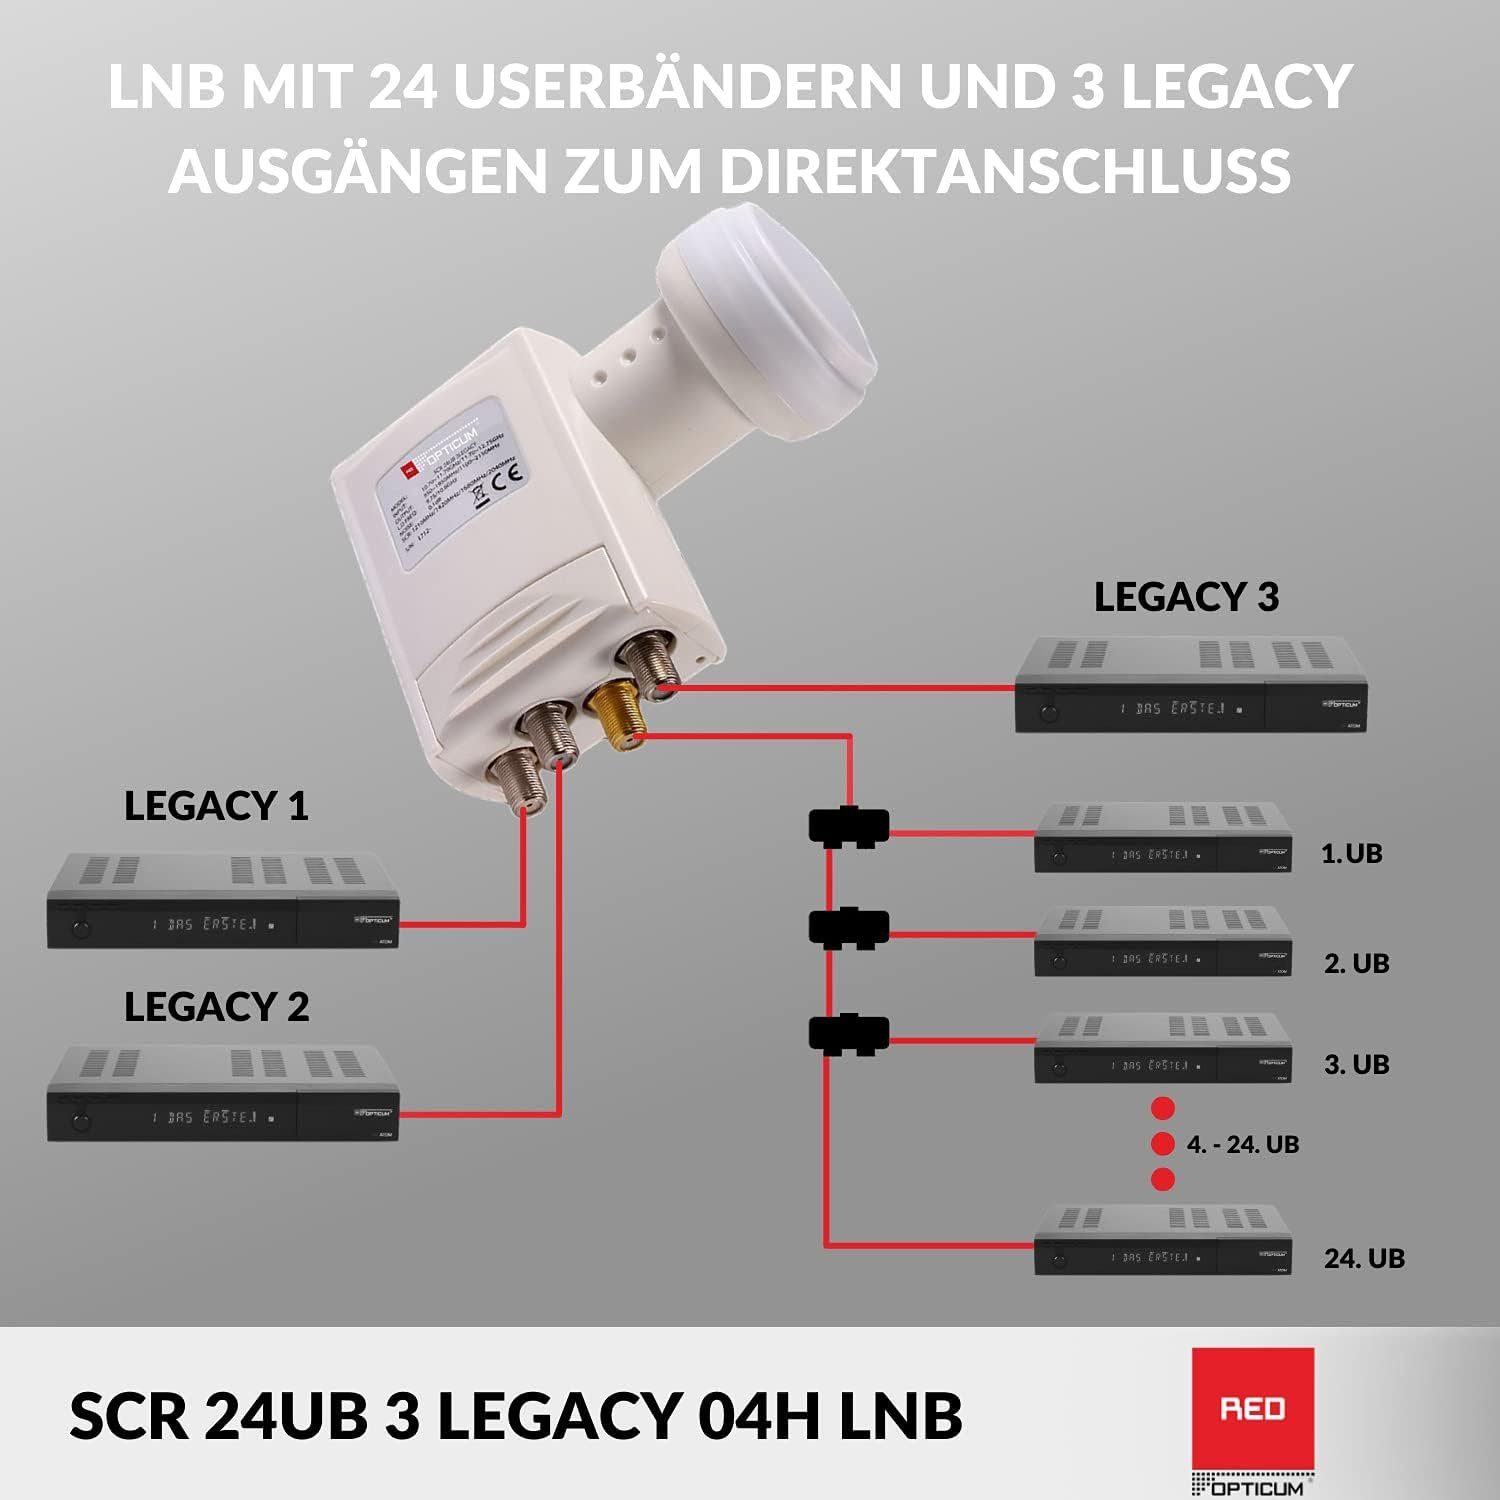 Legacy 3 3 mit LNB Legacy Ausgängen) Universal-Quad-LNB Userbändern 24 (Sat Unicable LNB CR OPTICUM RED und SCR 24-UB